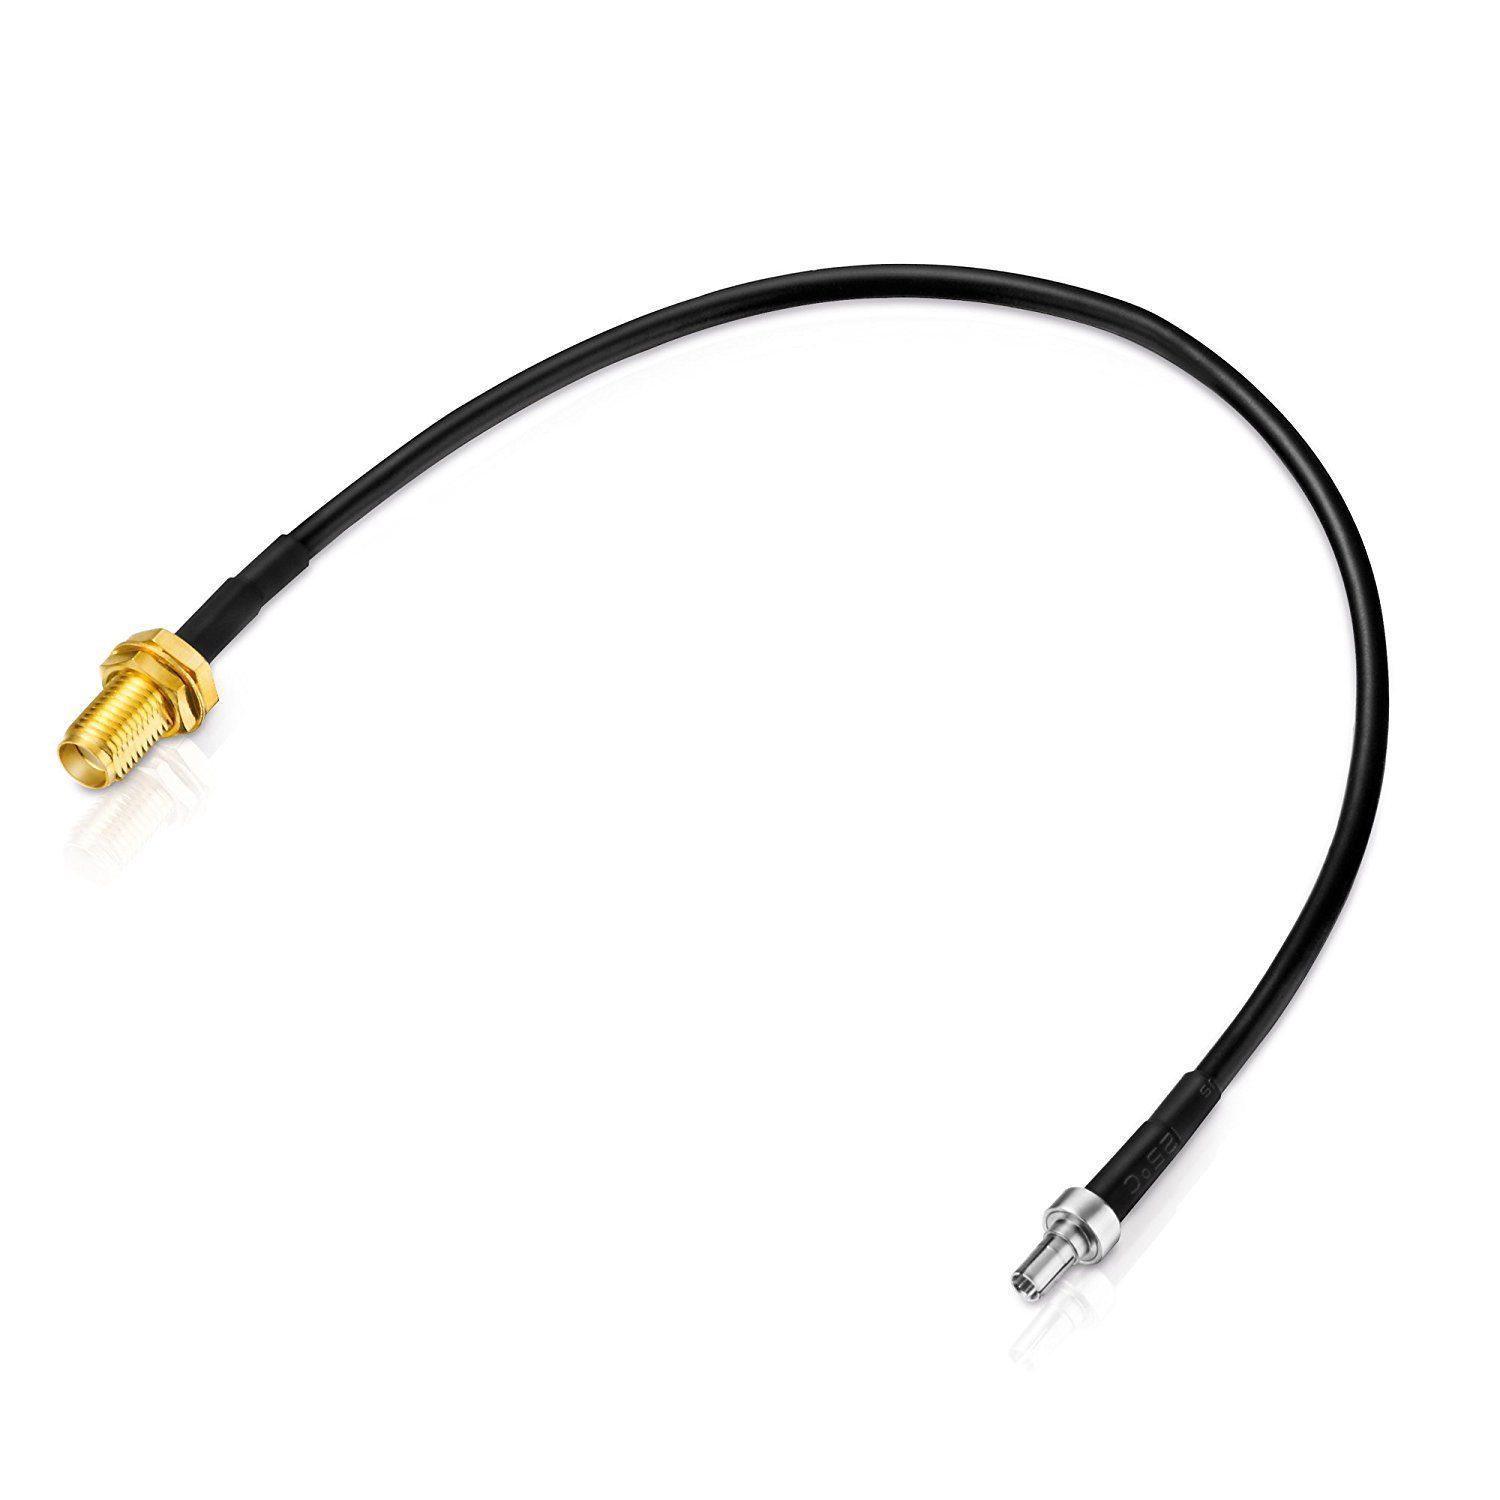 20 adaptare Pigtail / adaptare gerade SMA-Buchse 60691 CRC9-Stecker cm SAT-Kabel Adapter-